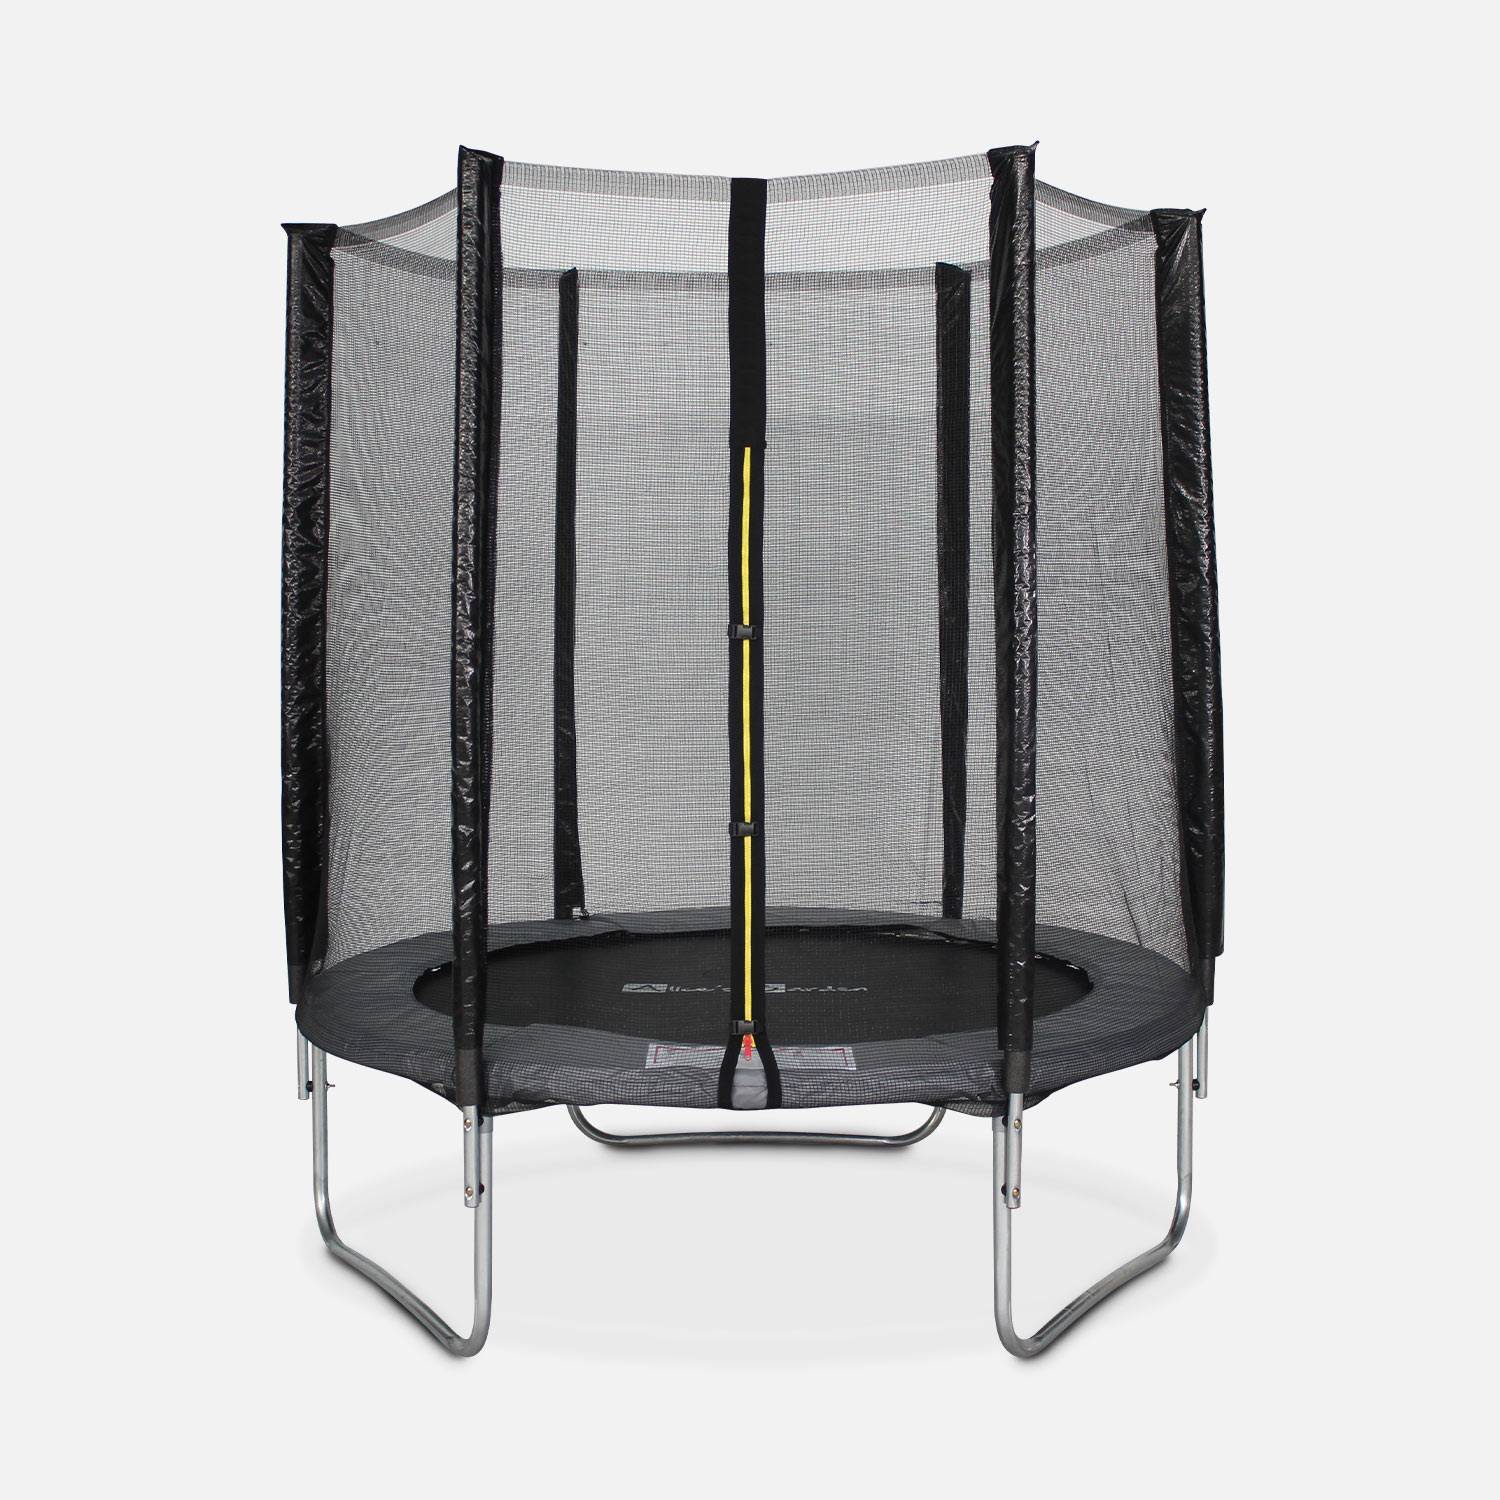 Round trampoline Ø 180cm grey with its protective net - Cassiopée - Garden trampoline 2m| PRO quality | EU standards.,sweeek,Photo1